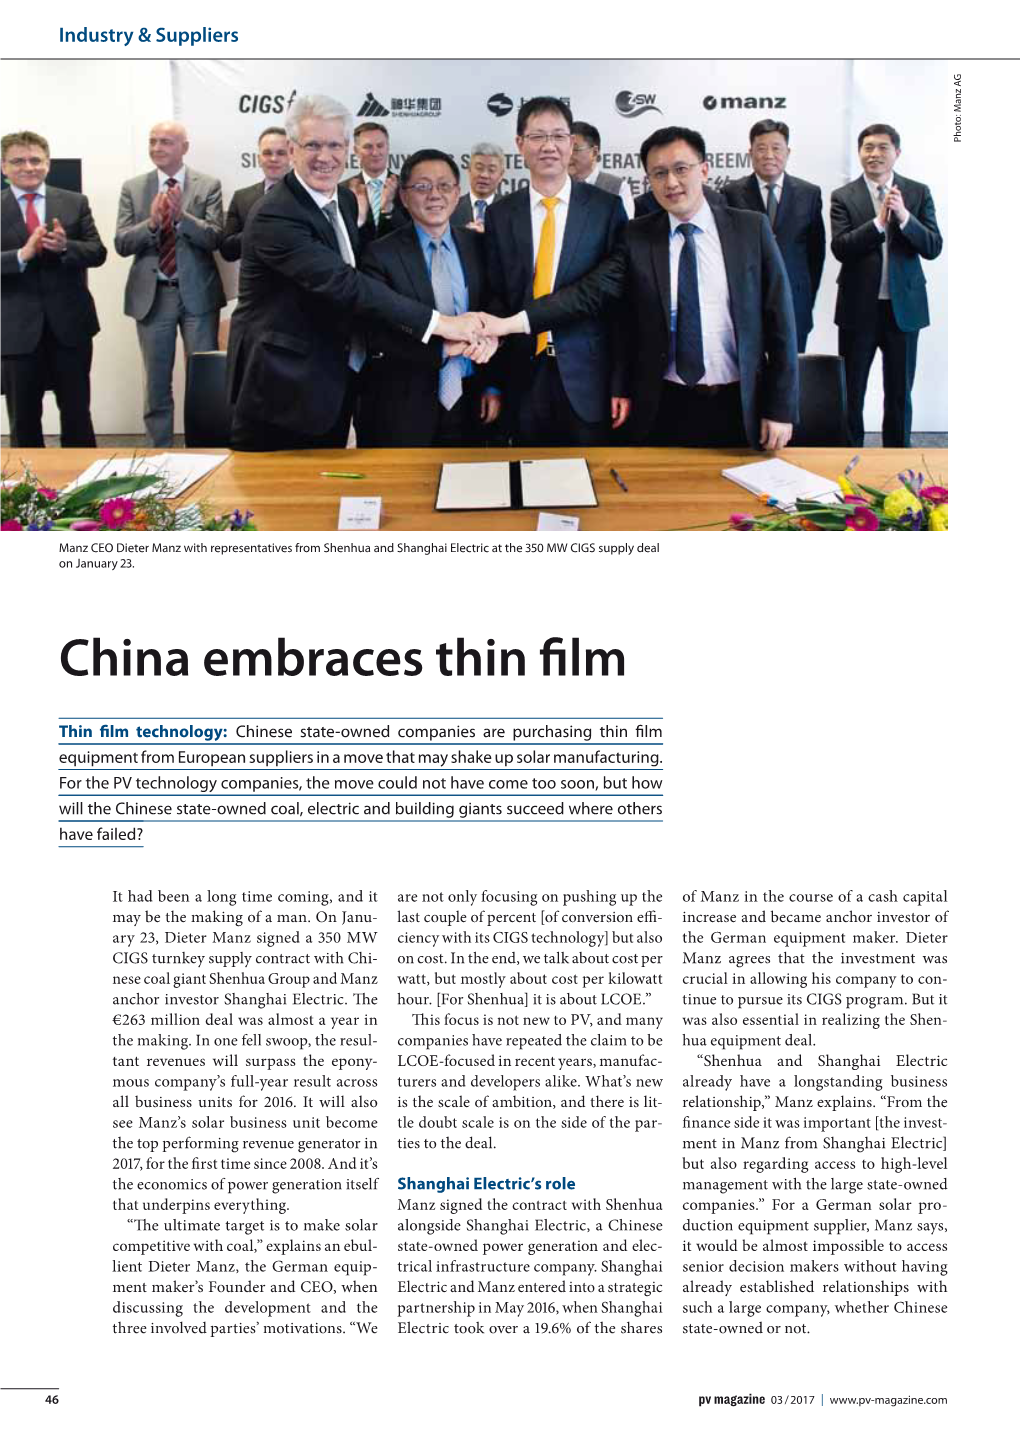 China Embraces Thin Film